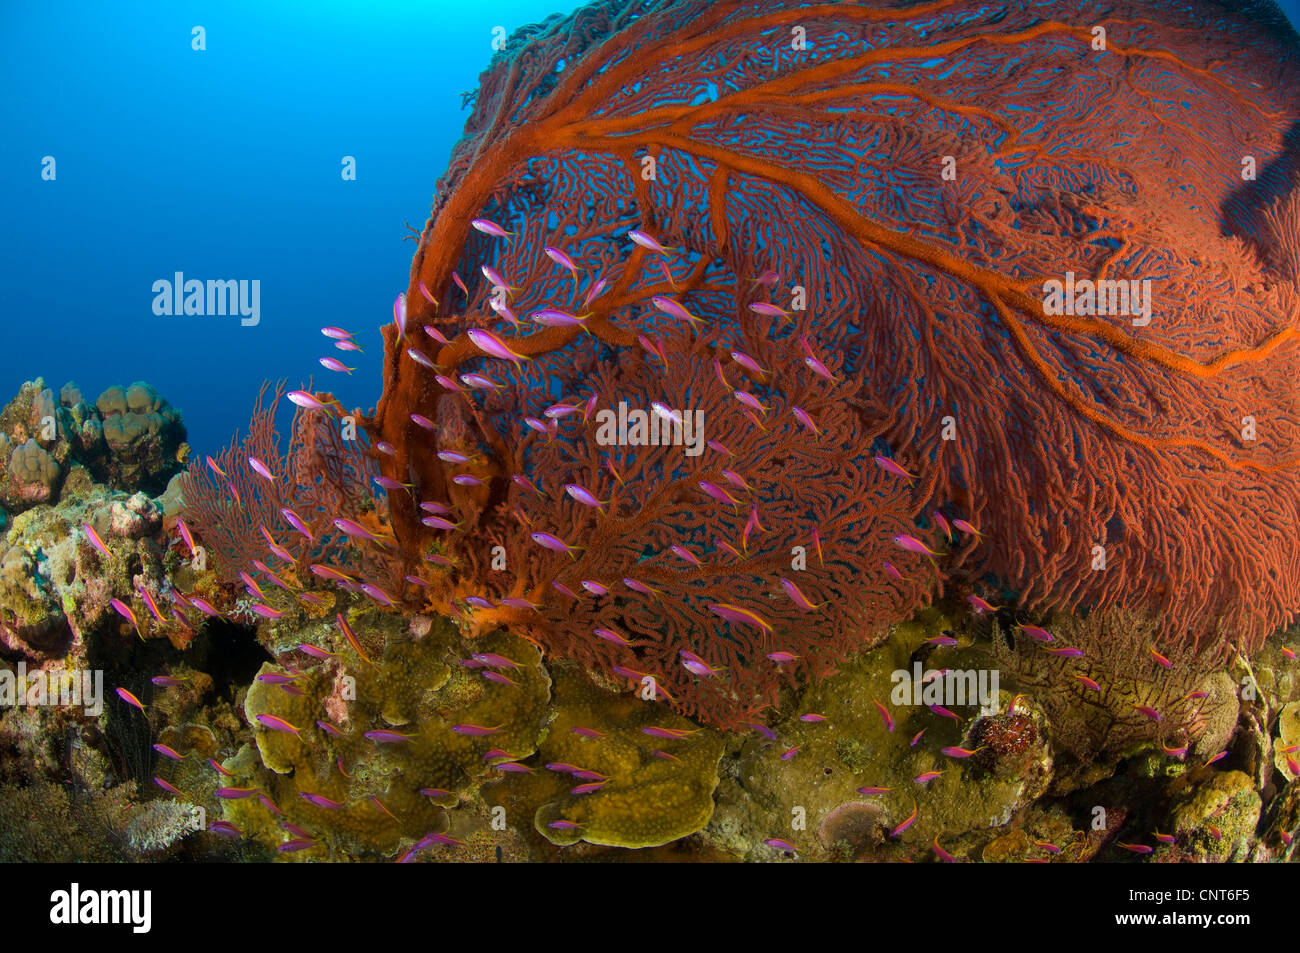 A red sea fan (Melthaea sp.) with purple anthias fish, Kimbe Bay, Papua New Guinea. Stock Photo